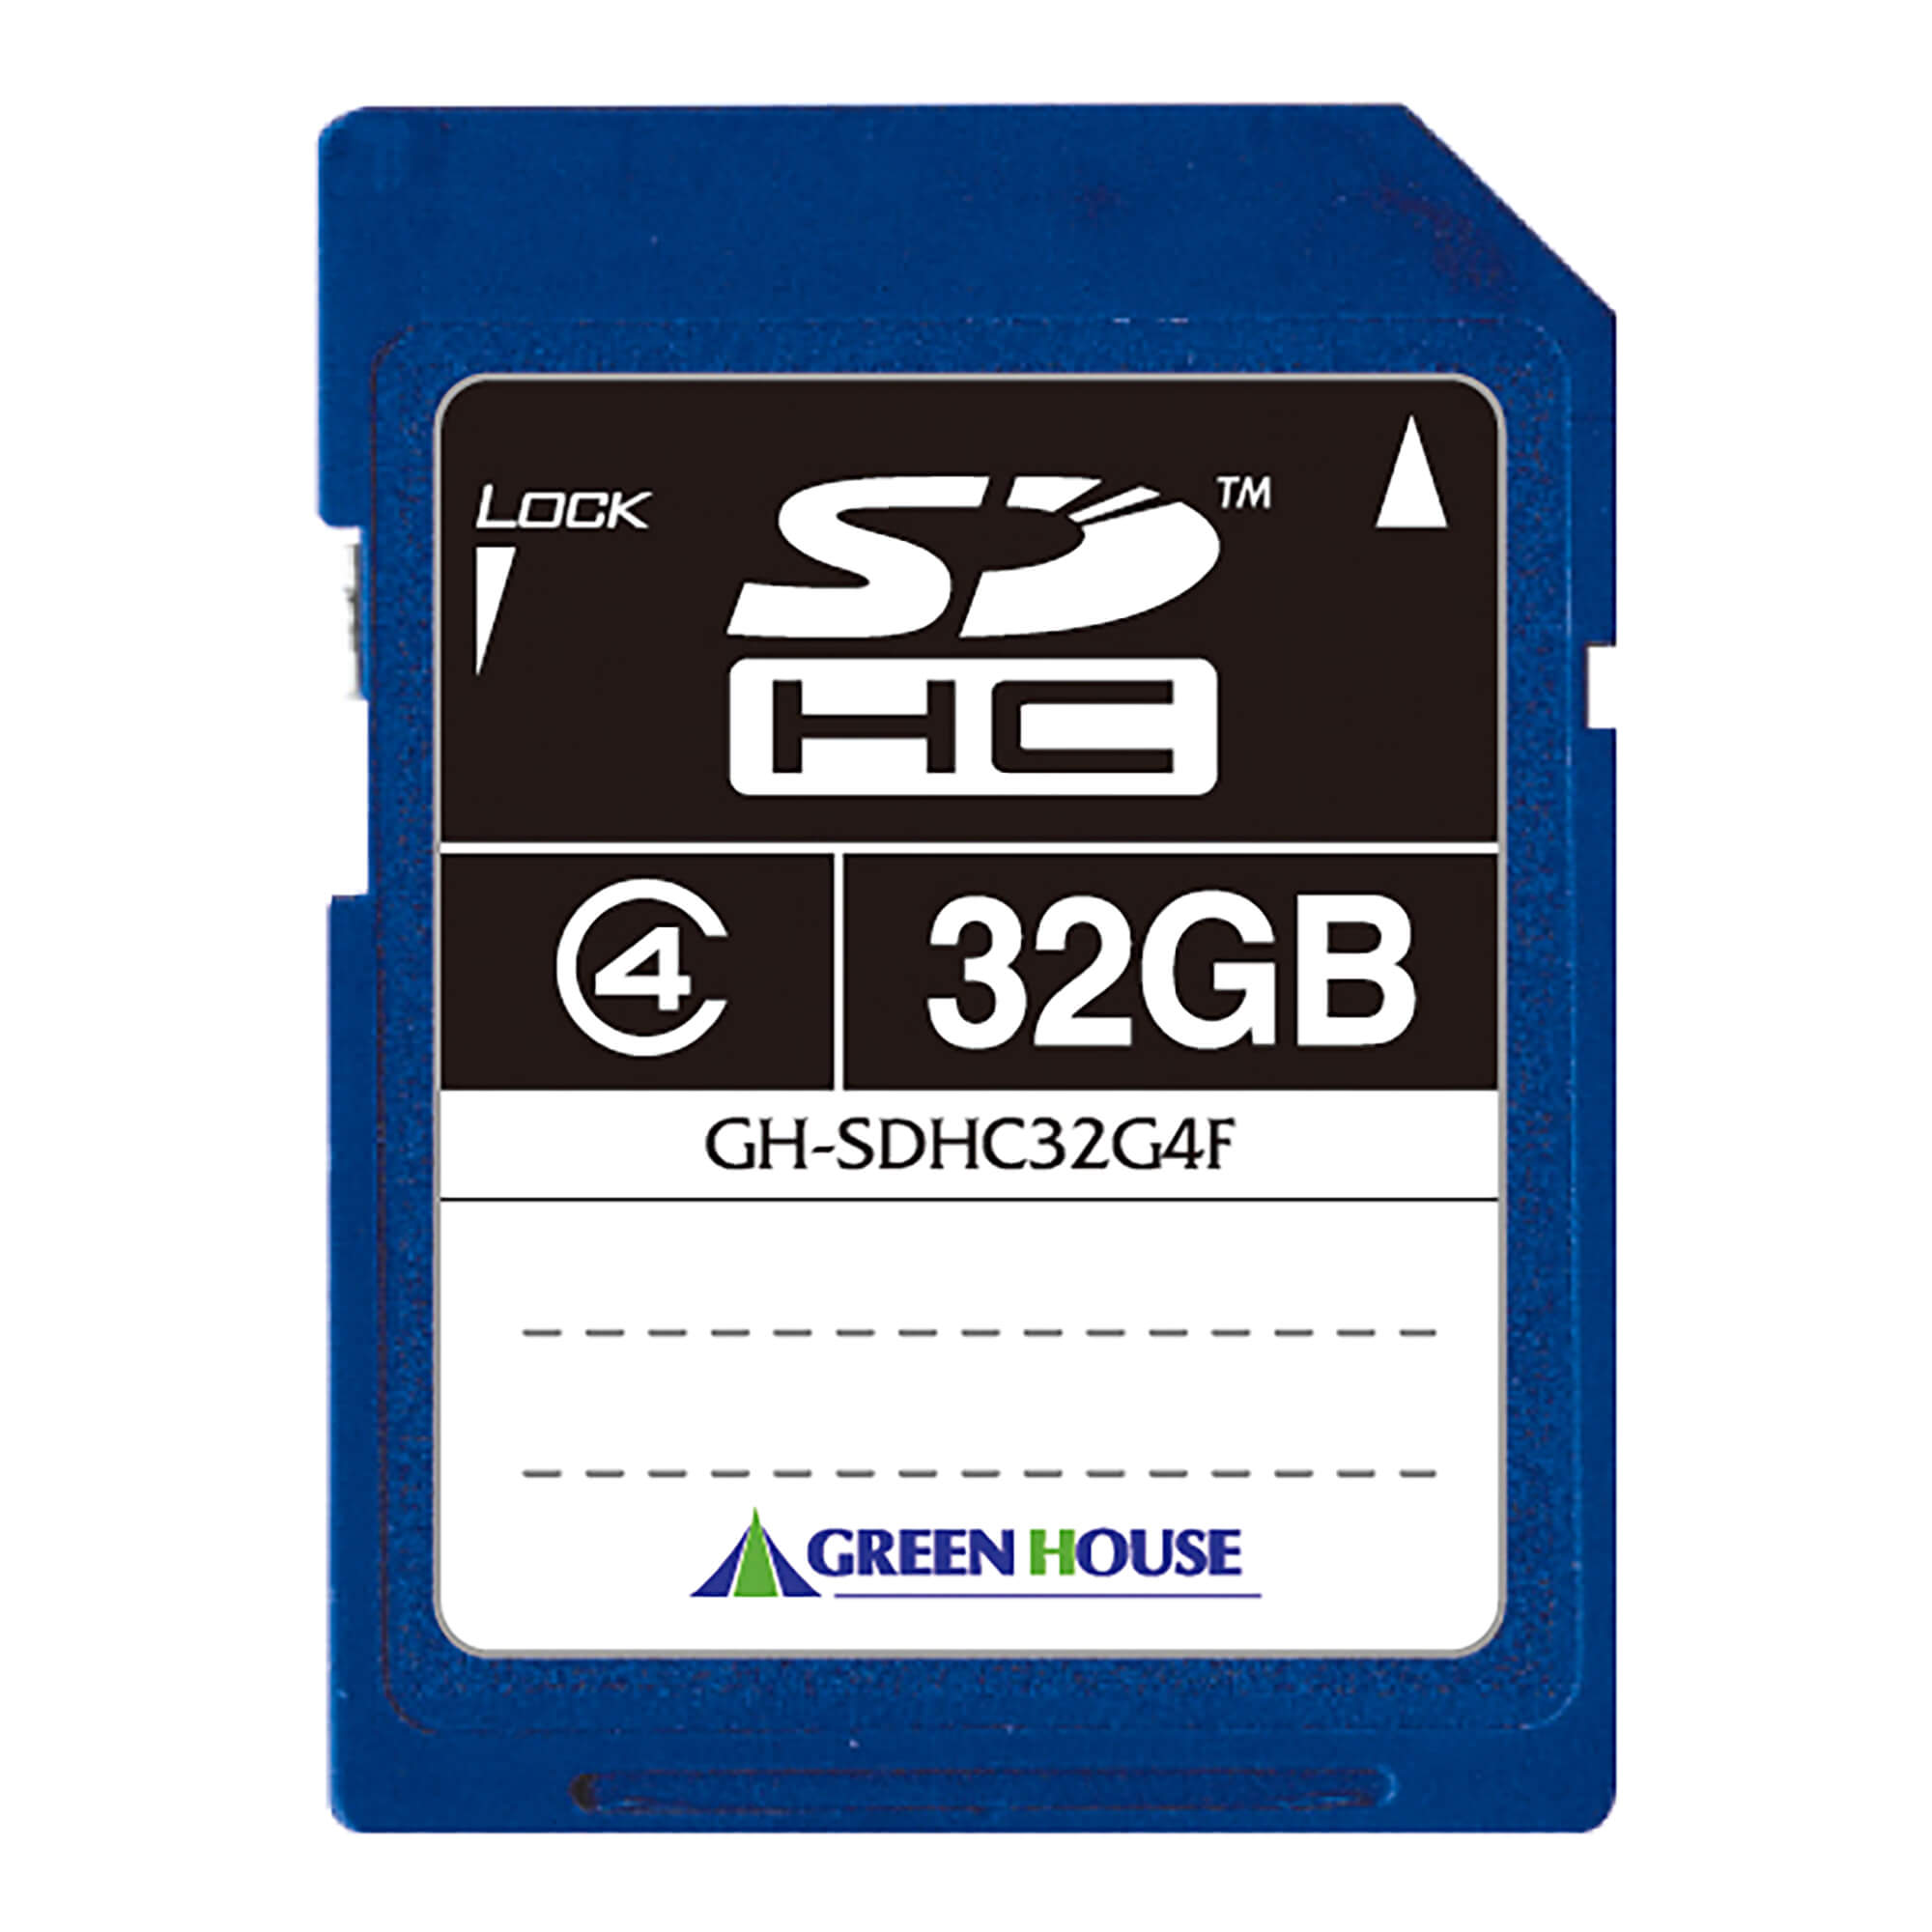 SDHCメモリーカード(4GB～32GB) | GH-SDHC*4Fシリーズ | GREEN HOUSE ...